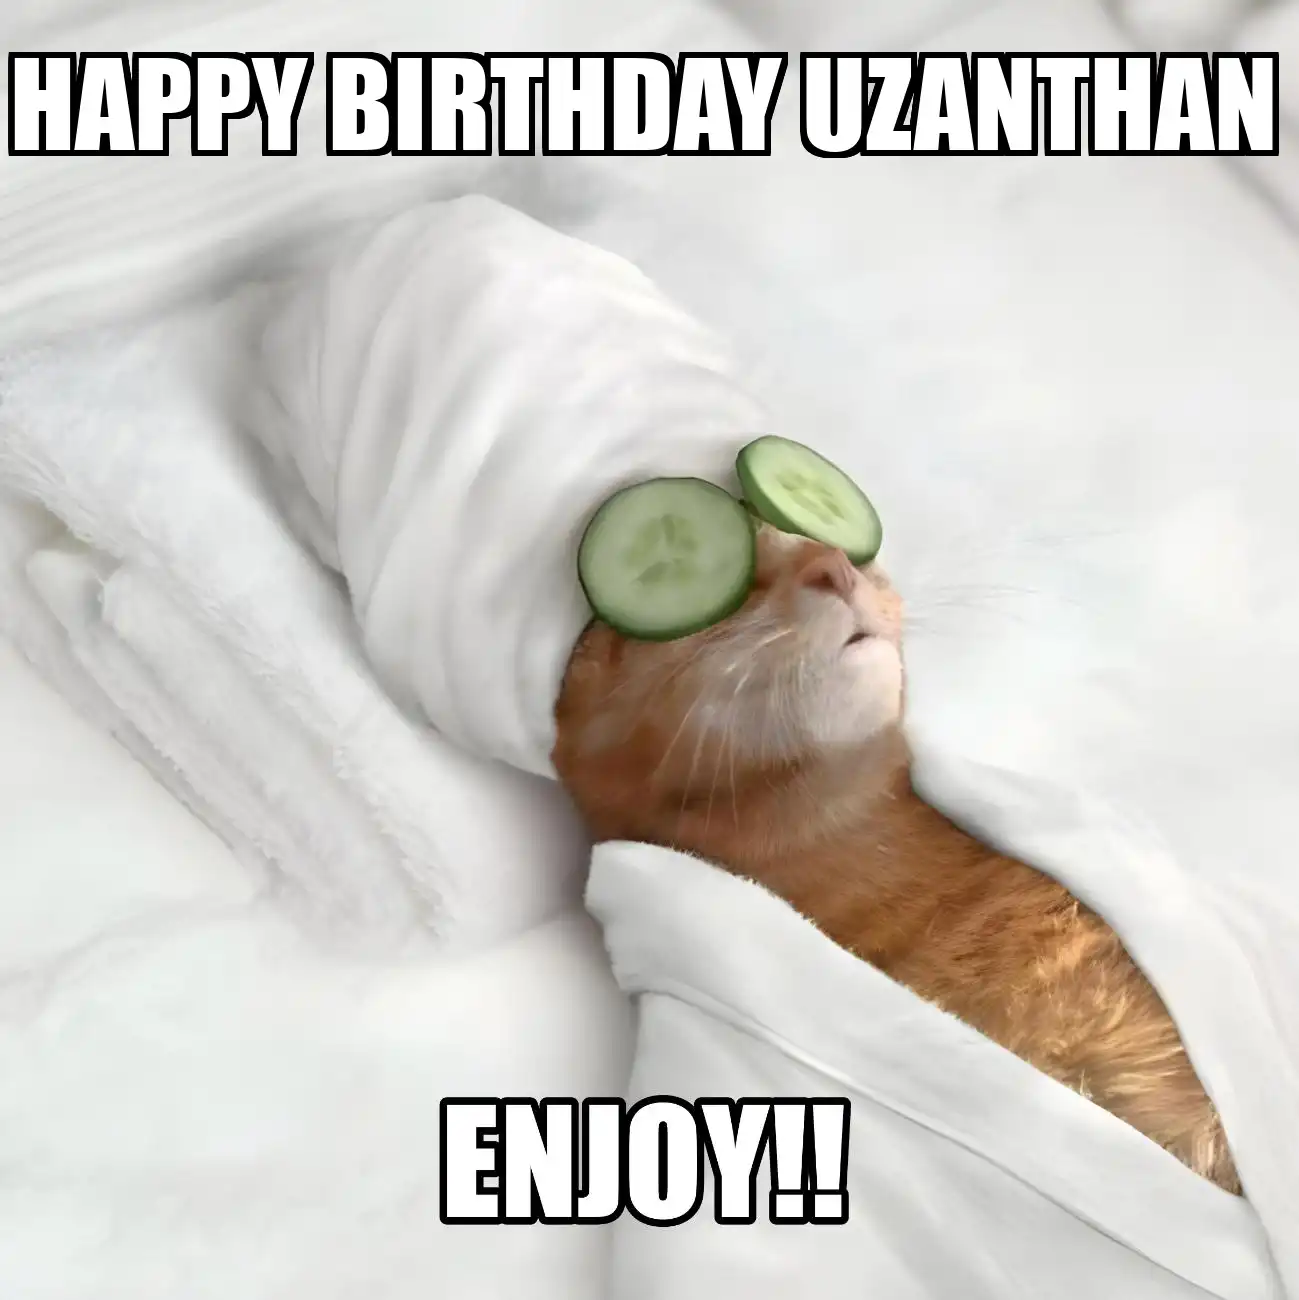 Happy Birthday Uzanthan Enjoy Cat Meme